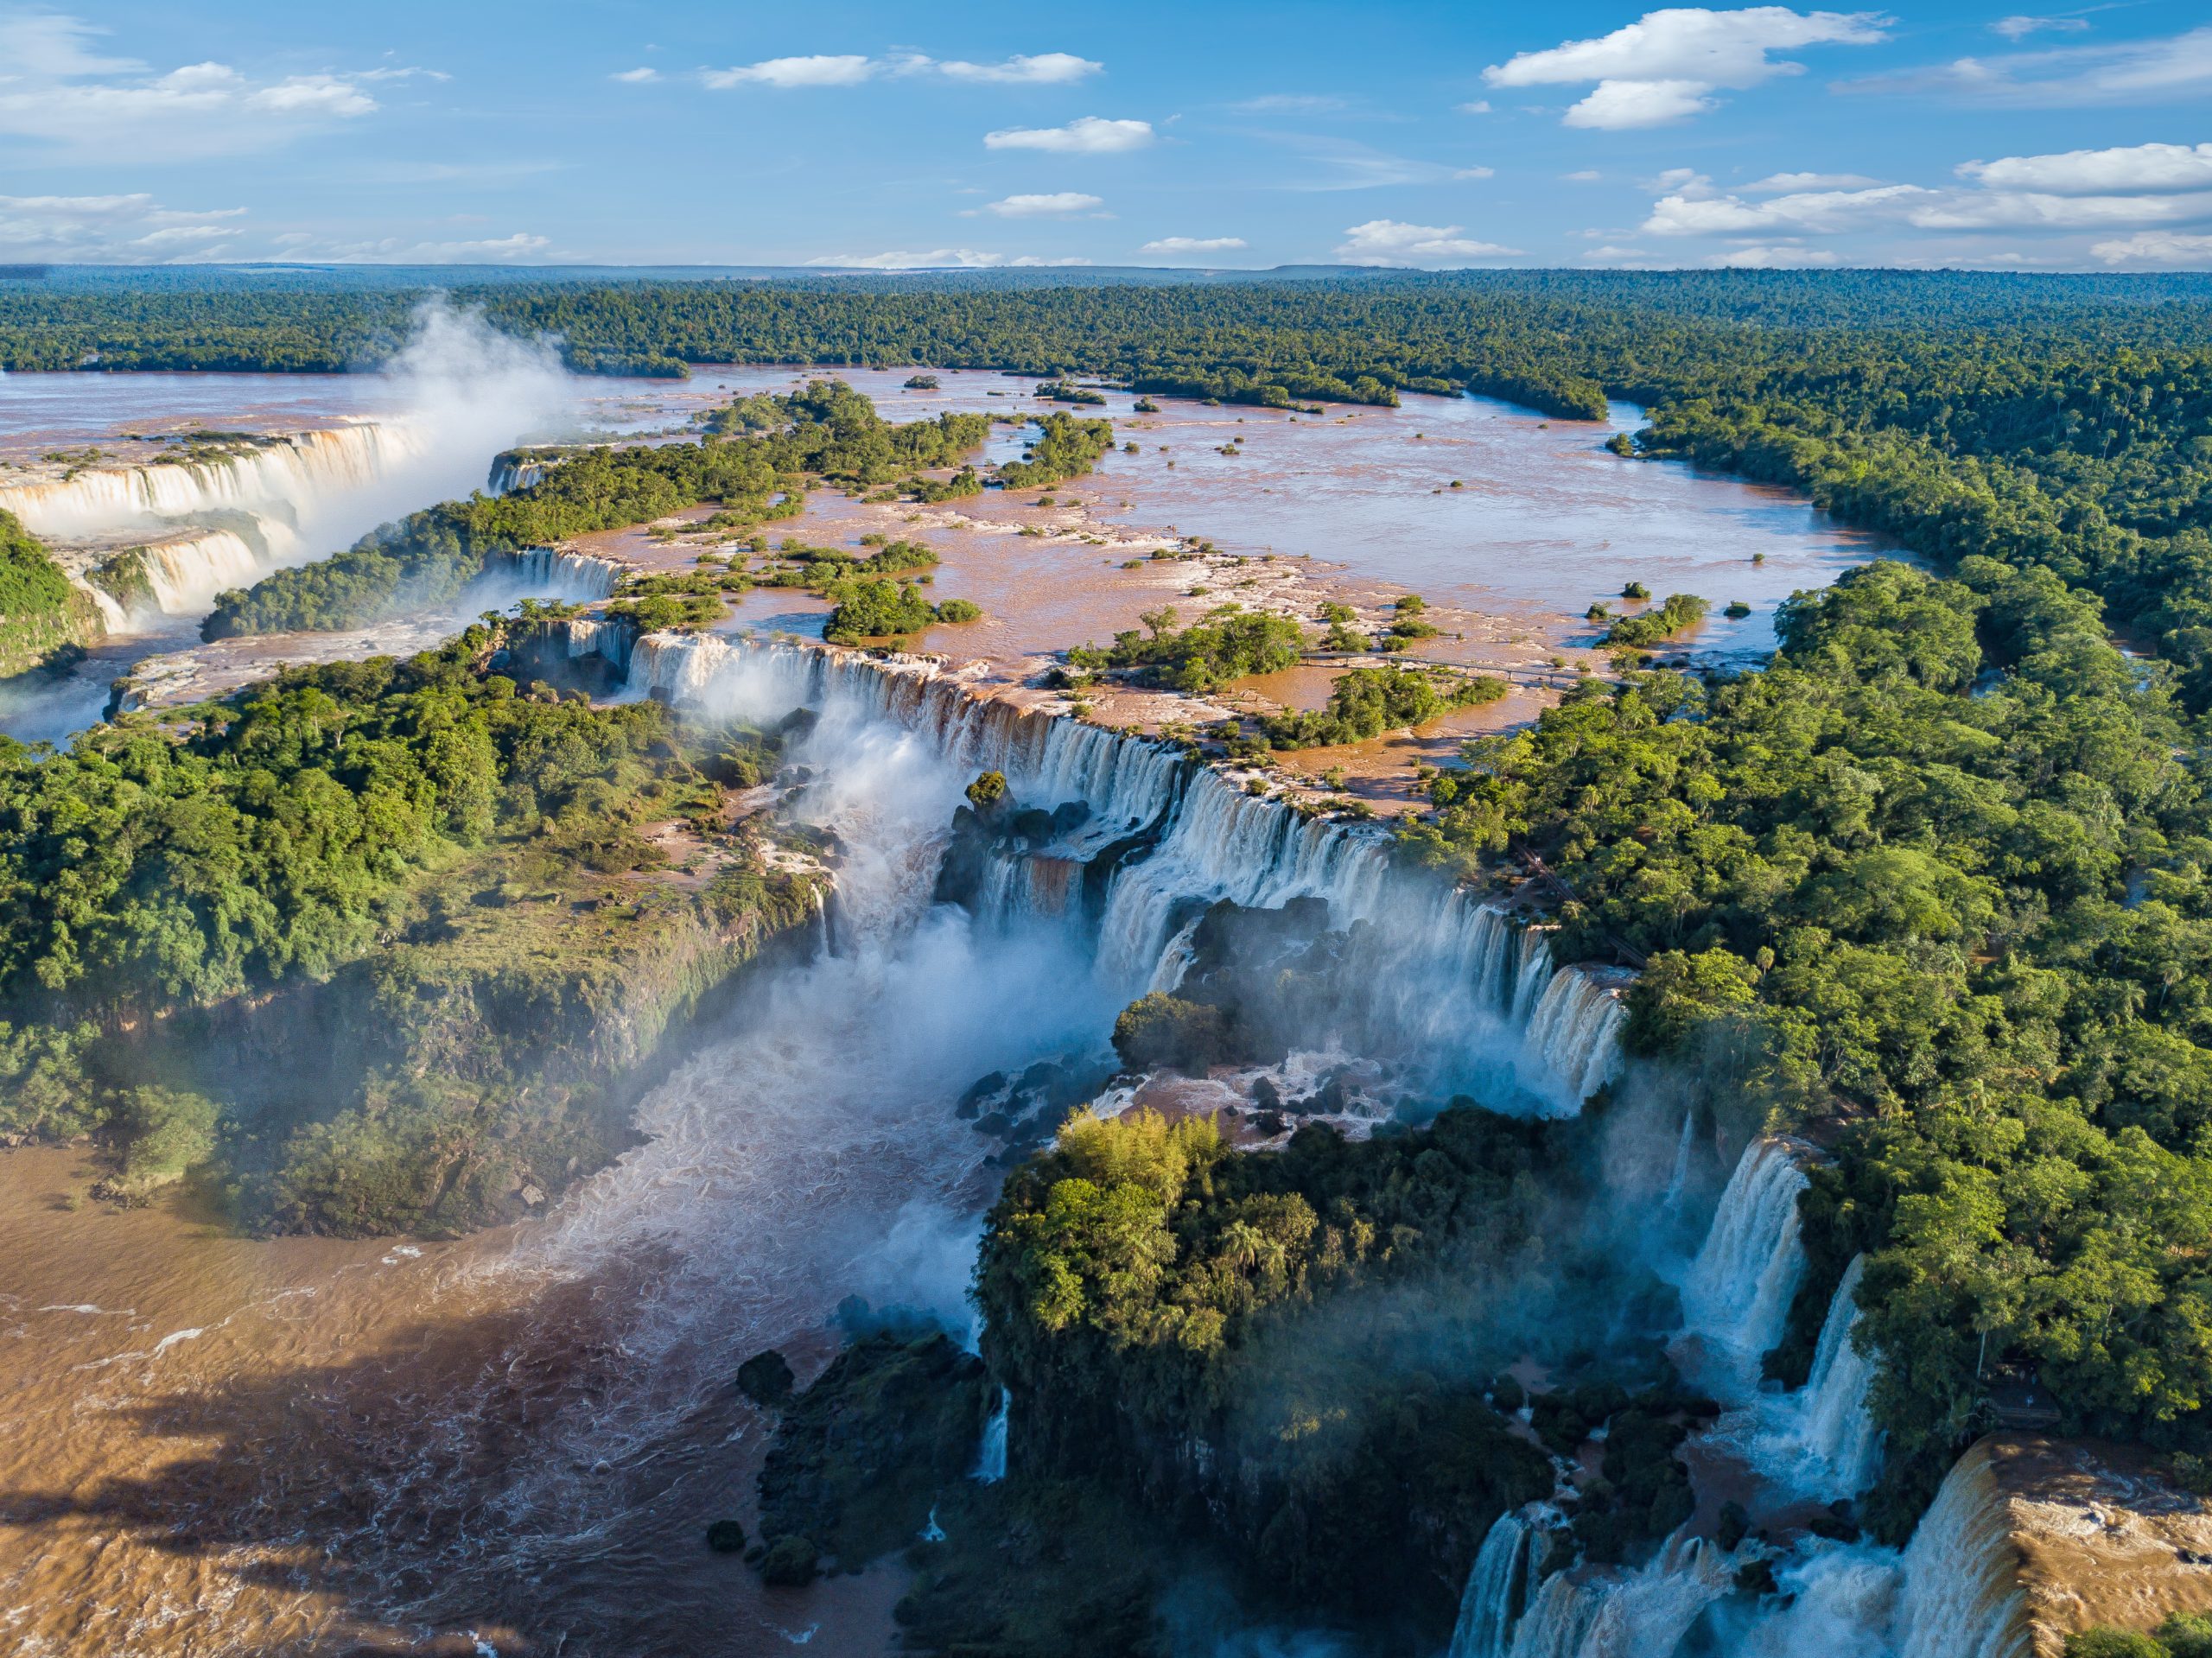 Aerial view of the Iguazu Falls. View over the Garganta del Diablo the Devil's Throat.